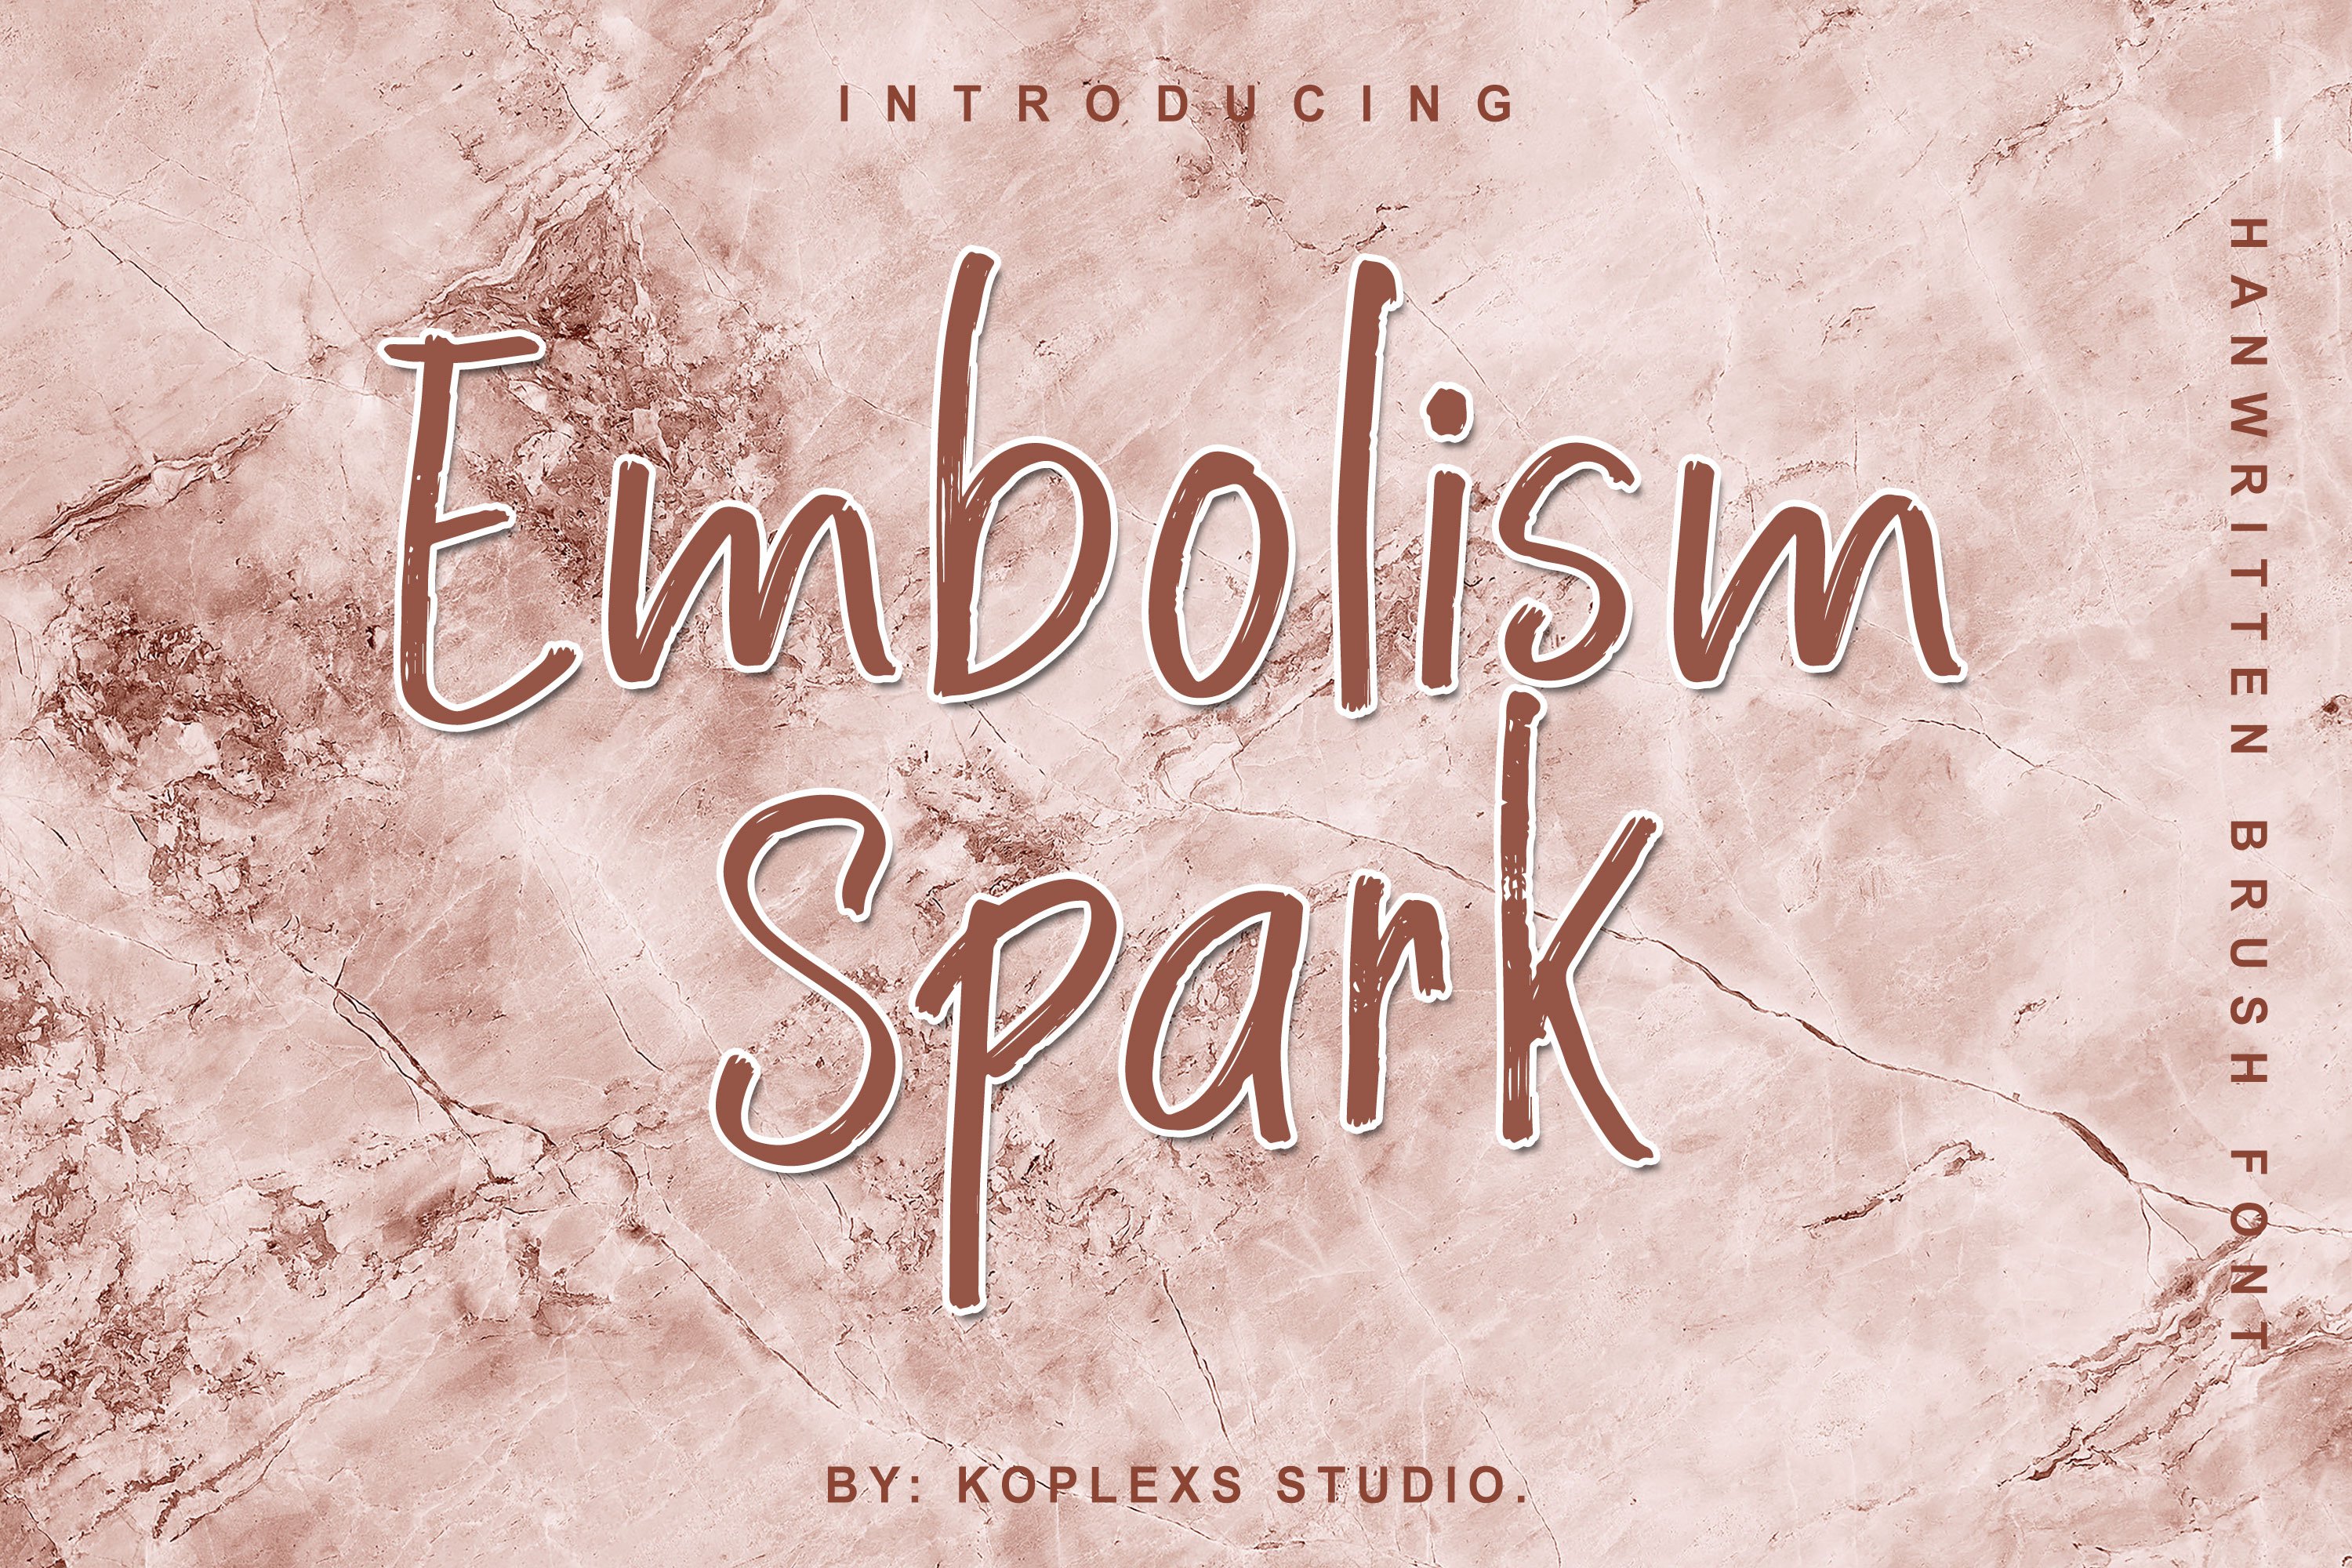 Embolism Spark - Natural Handwritten cover image.